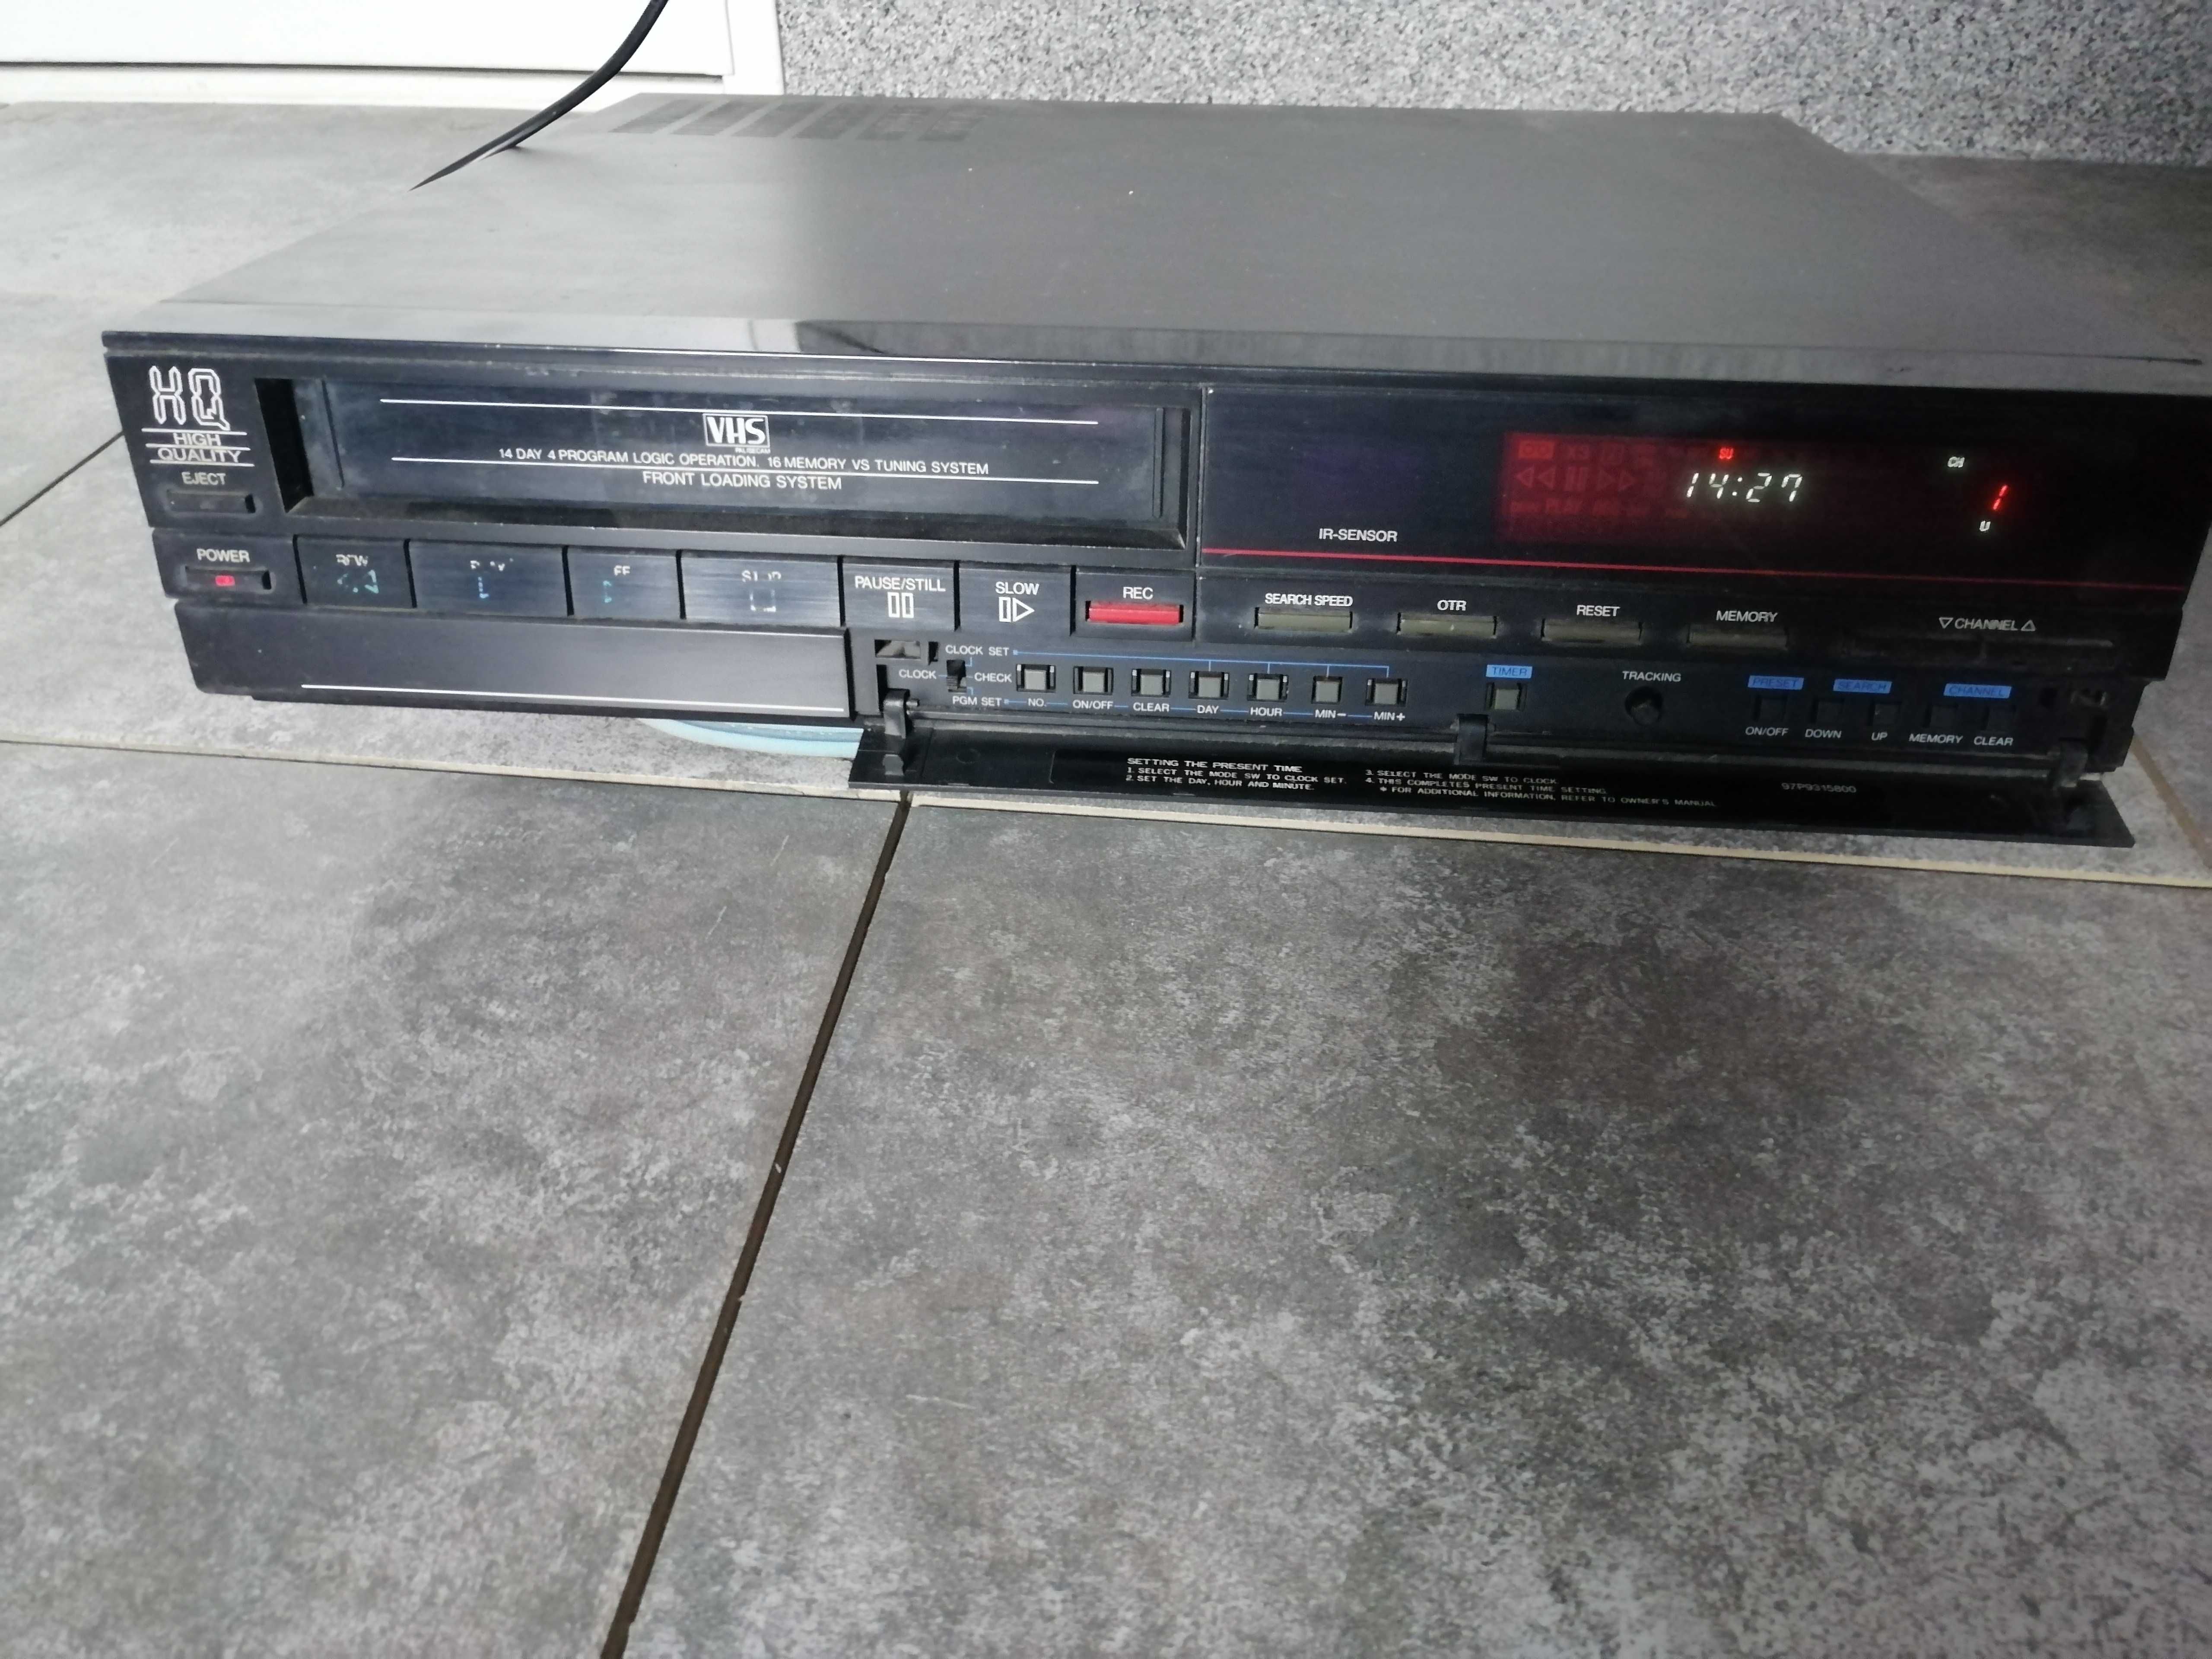 Magnetwid VHS TEC 3832 VCR videorecorder